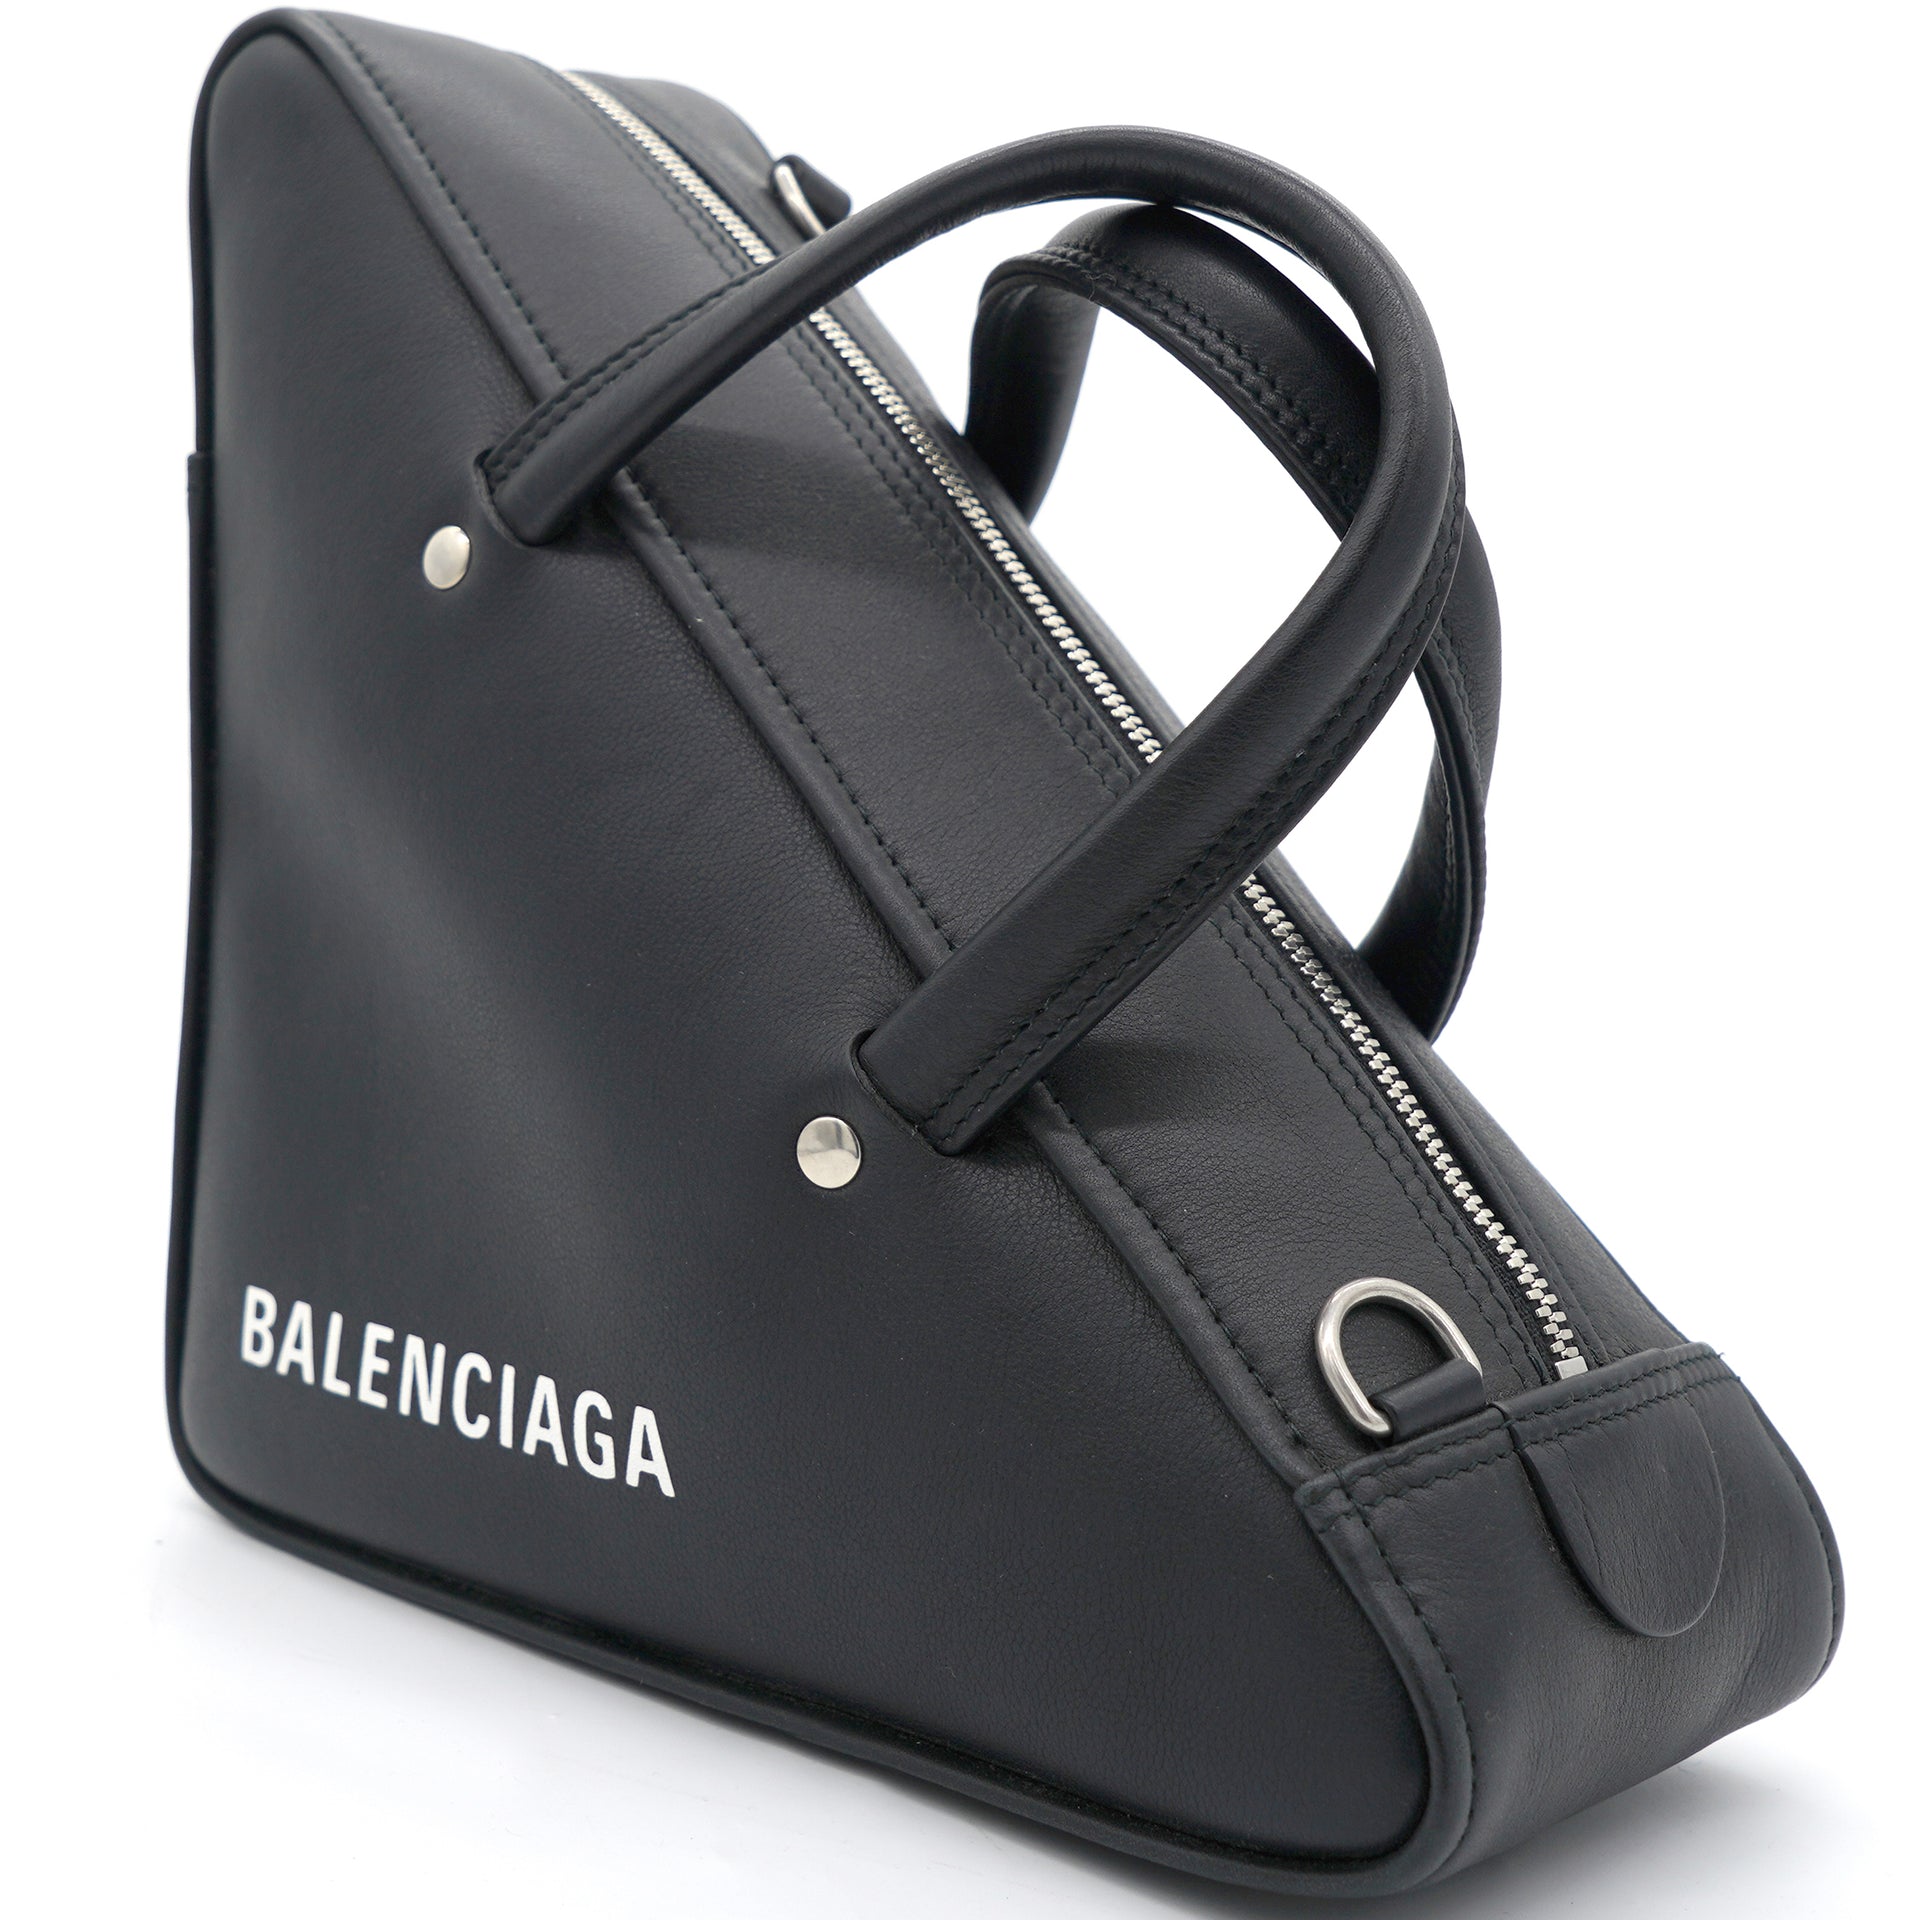 Black Calfskin Leather Small Triangle Duffel Bag